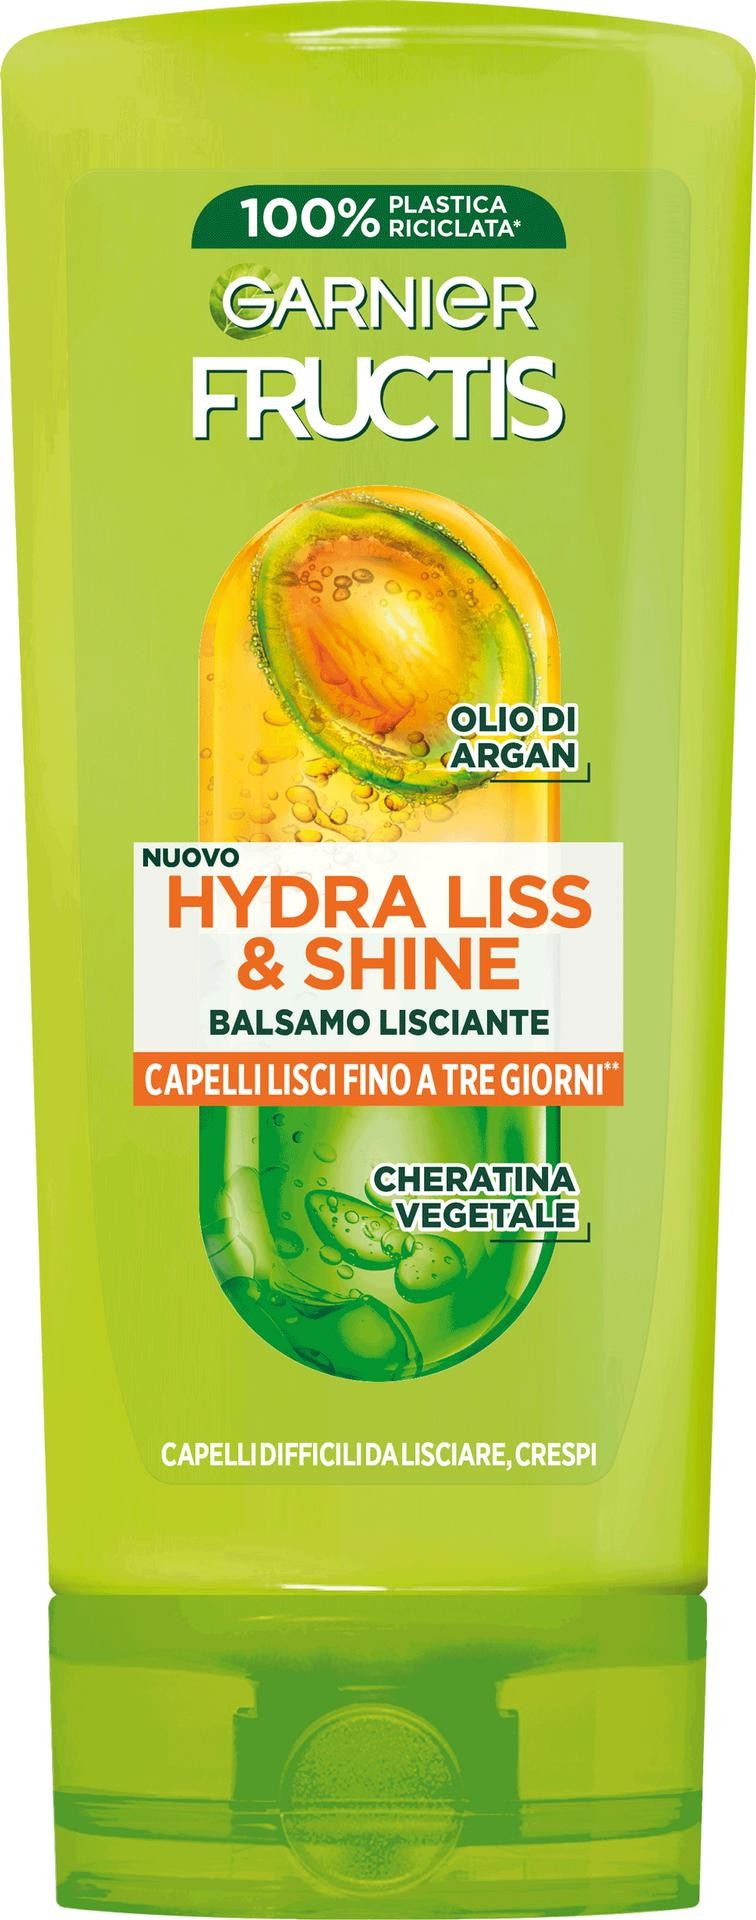 Garnier Fructis Balsamo lisciante Hydra Liss & Shine 200ml